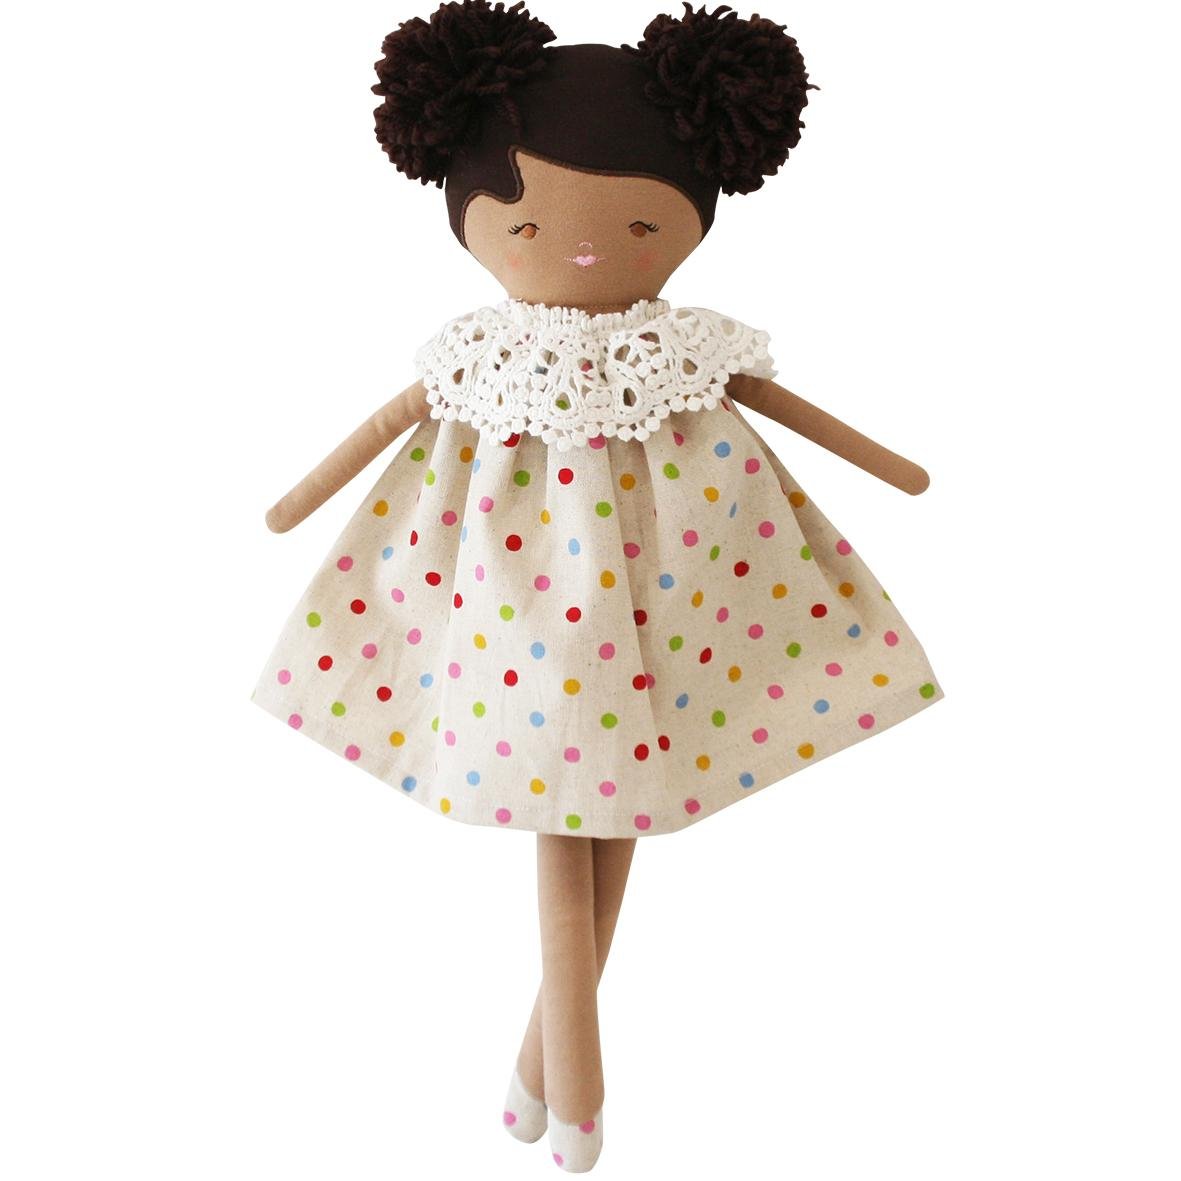 Aggie Doll by Alimrose - Maude Kids Decor